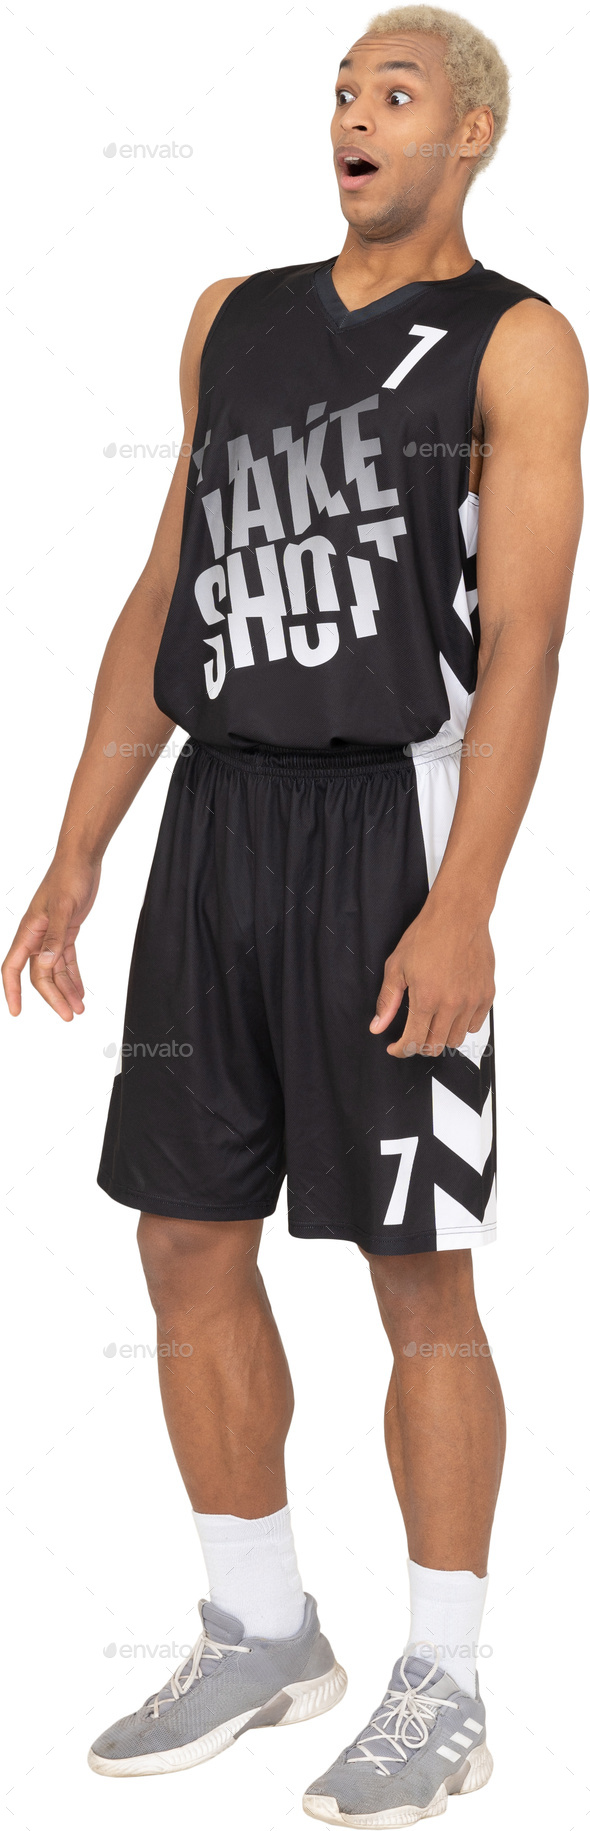 a man wearing black and white basketball shorts and a take shot shirt